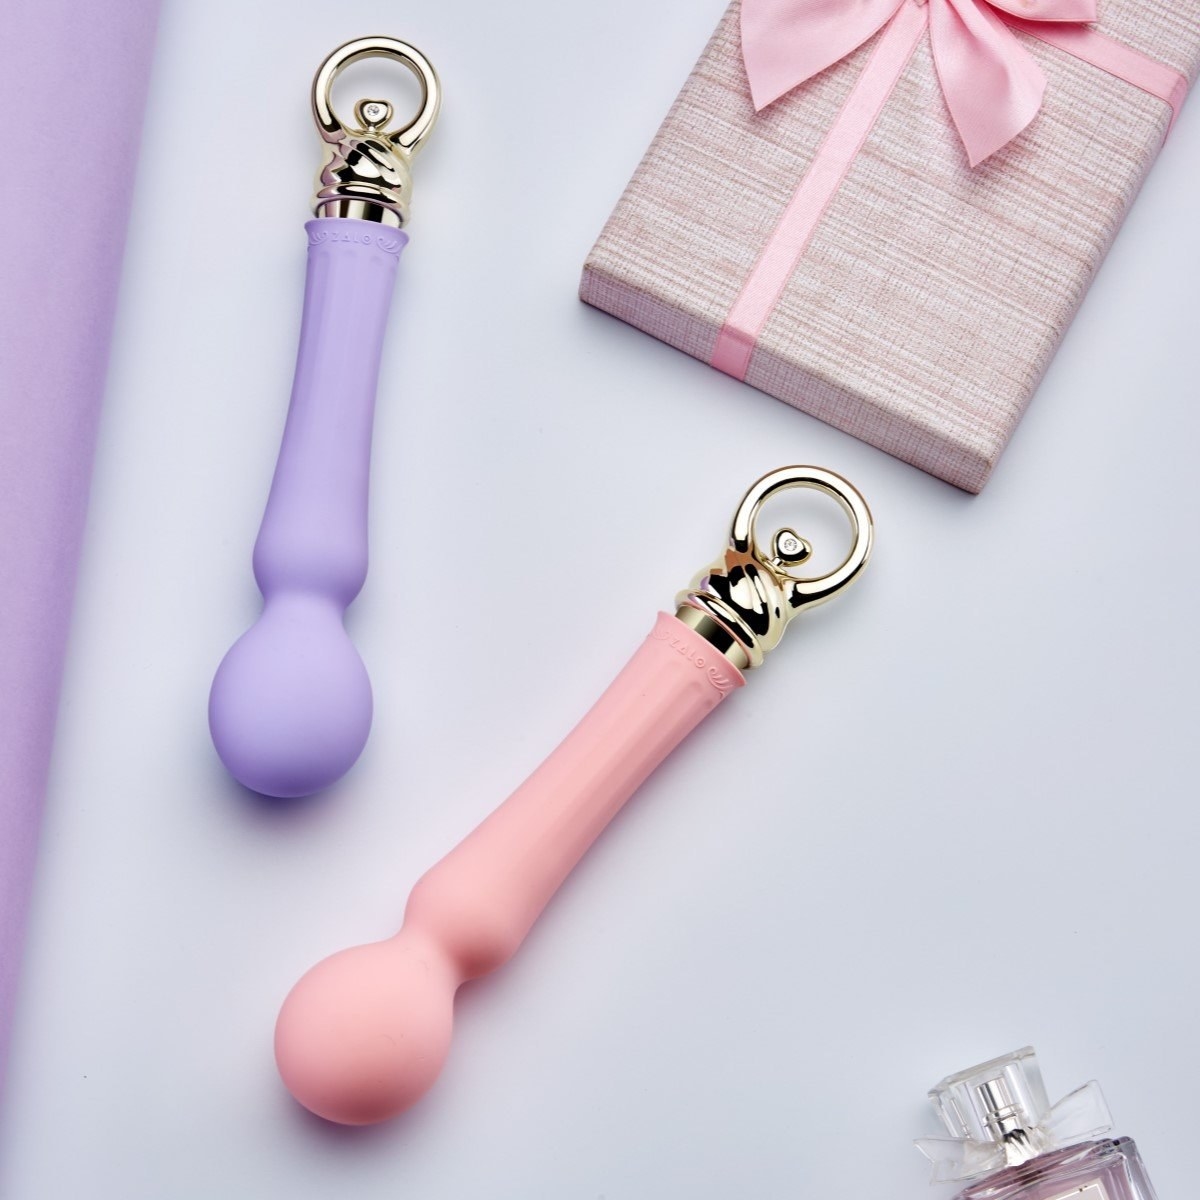 Purple and pink wand vibrators